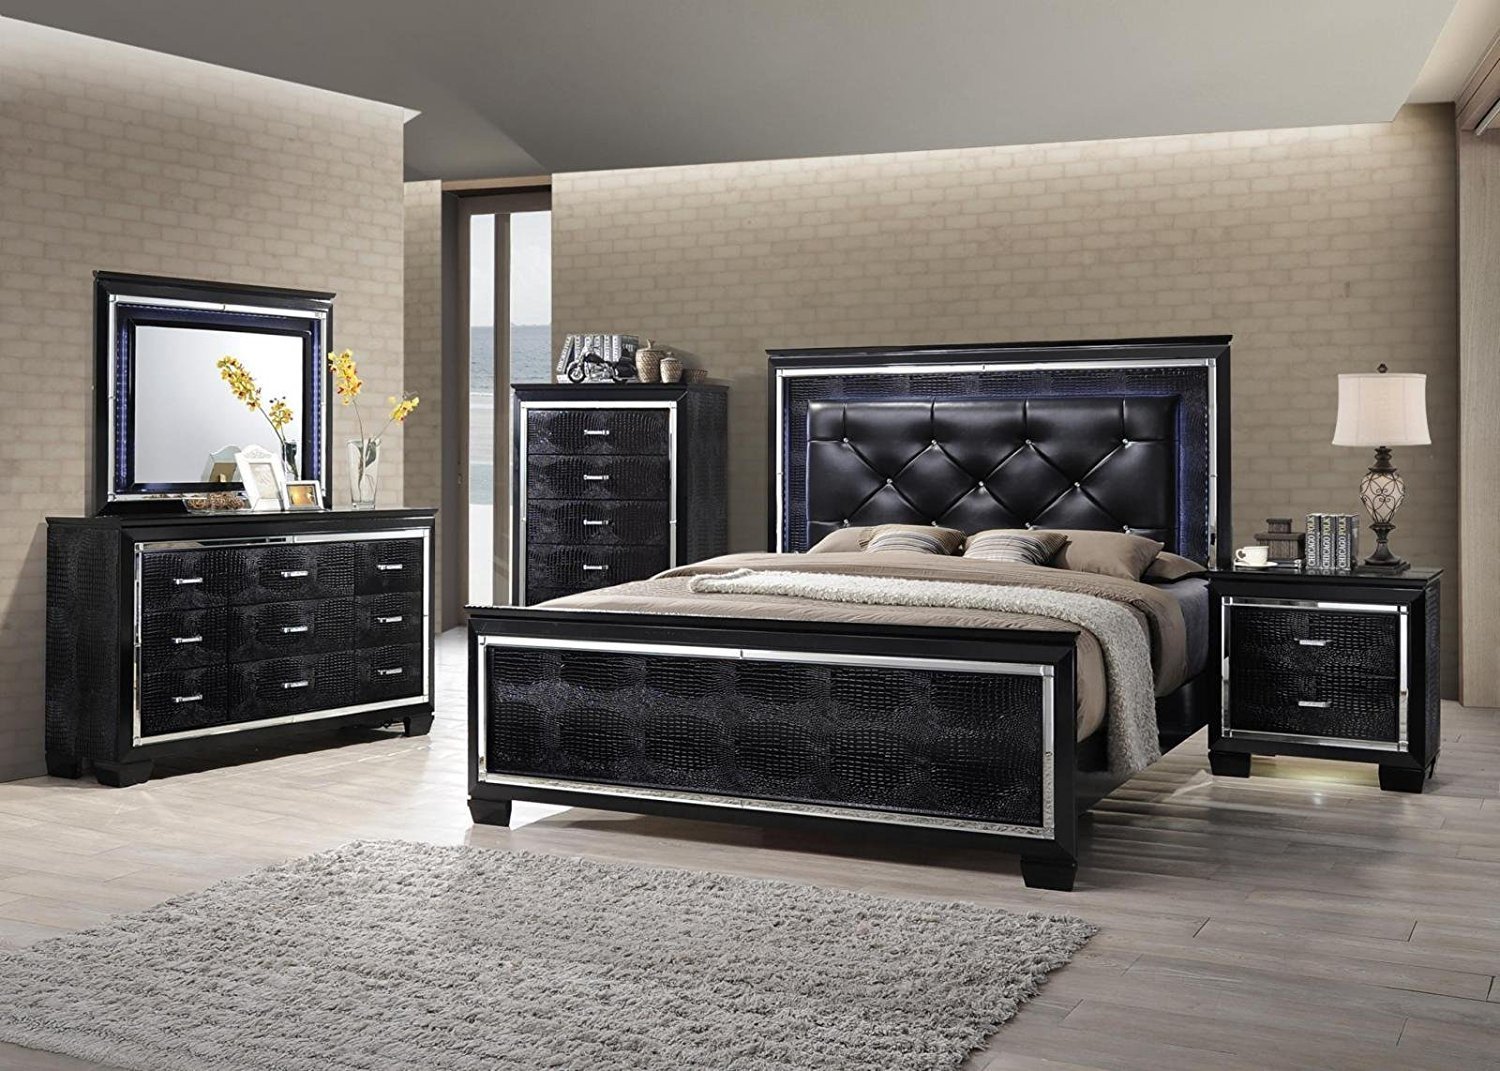 Tufted Queen Bedroom Set New Amazon soflex Tinley Black Leather Diamond Tufted Panel